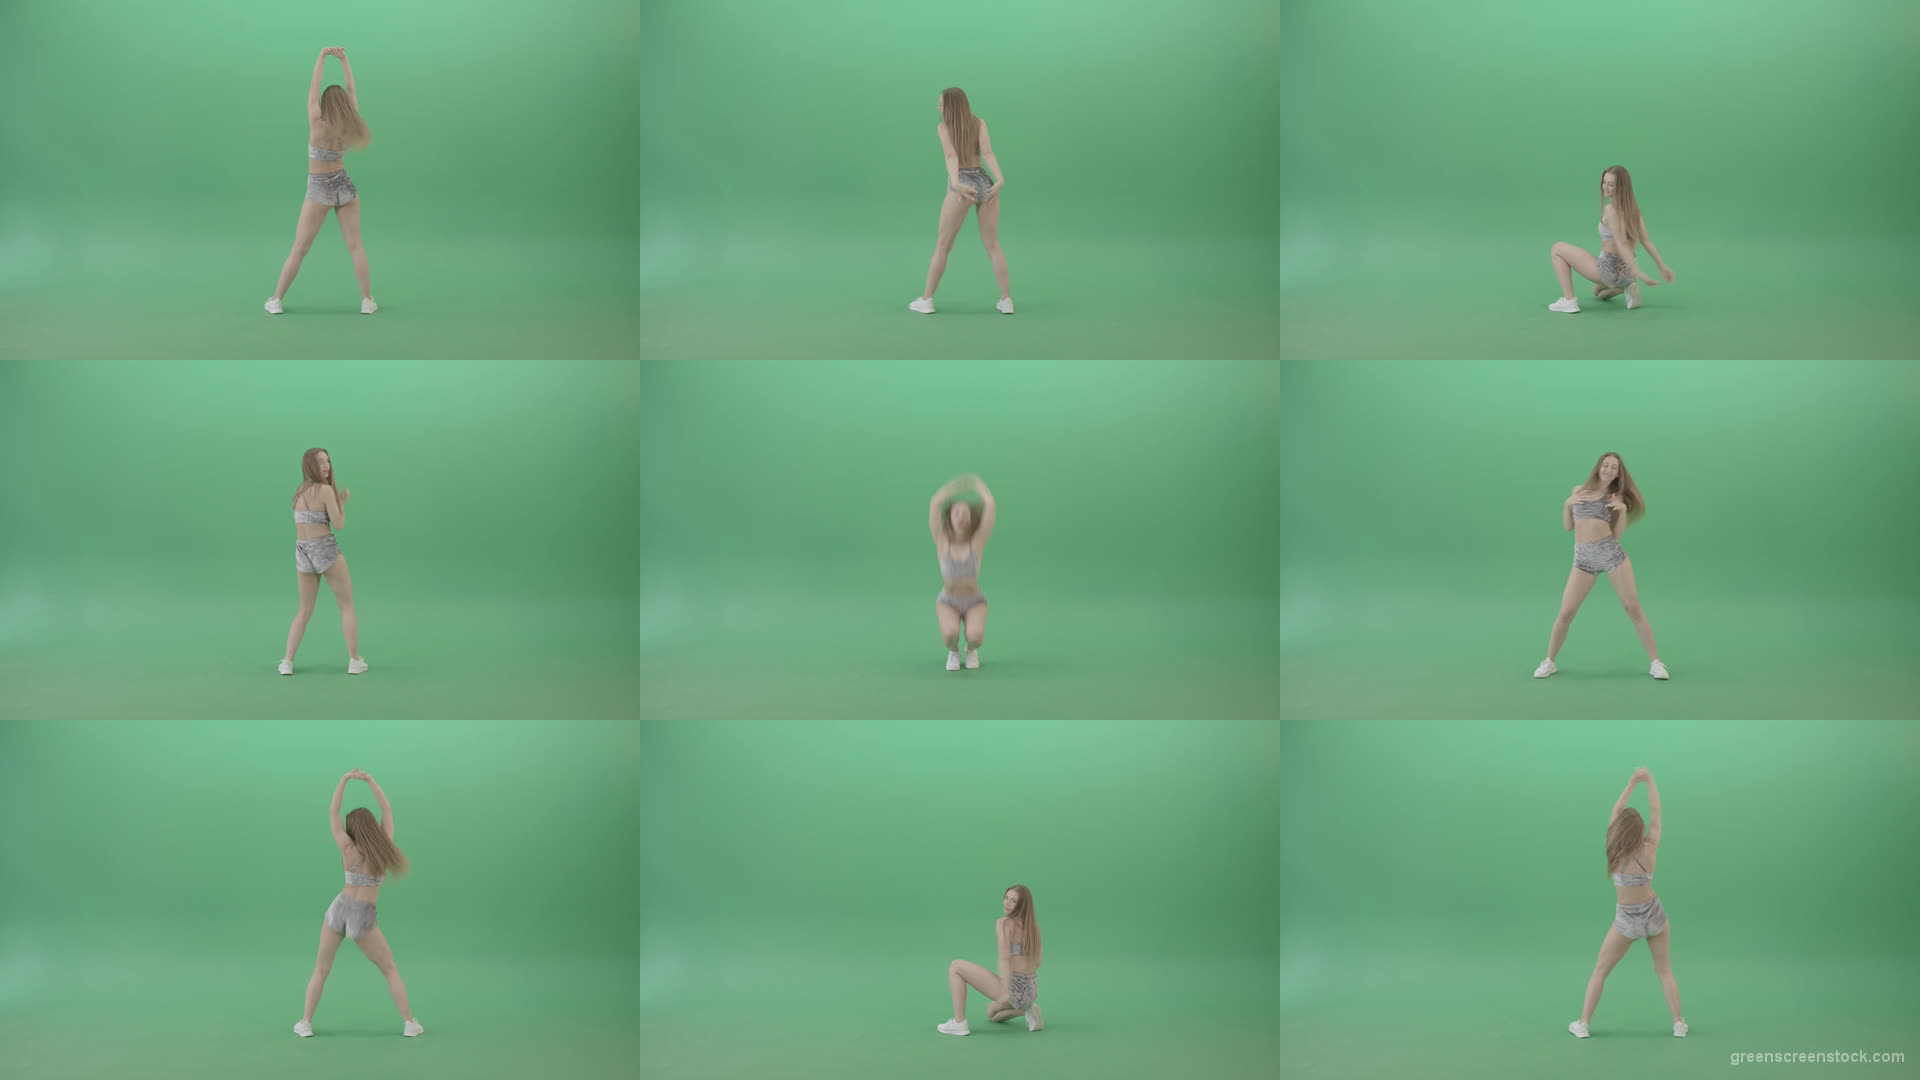 Amrican-girl-in-gray-dress-vellure-underwear-shaking-ass-in-twerk-dance-isolated-on-Green-Screen-4K-Video-Footage-1920 Green Screen Stock